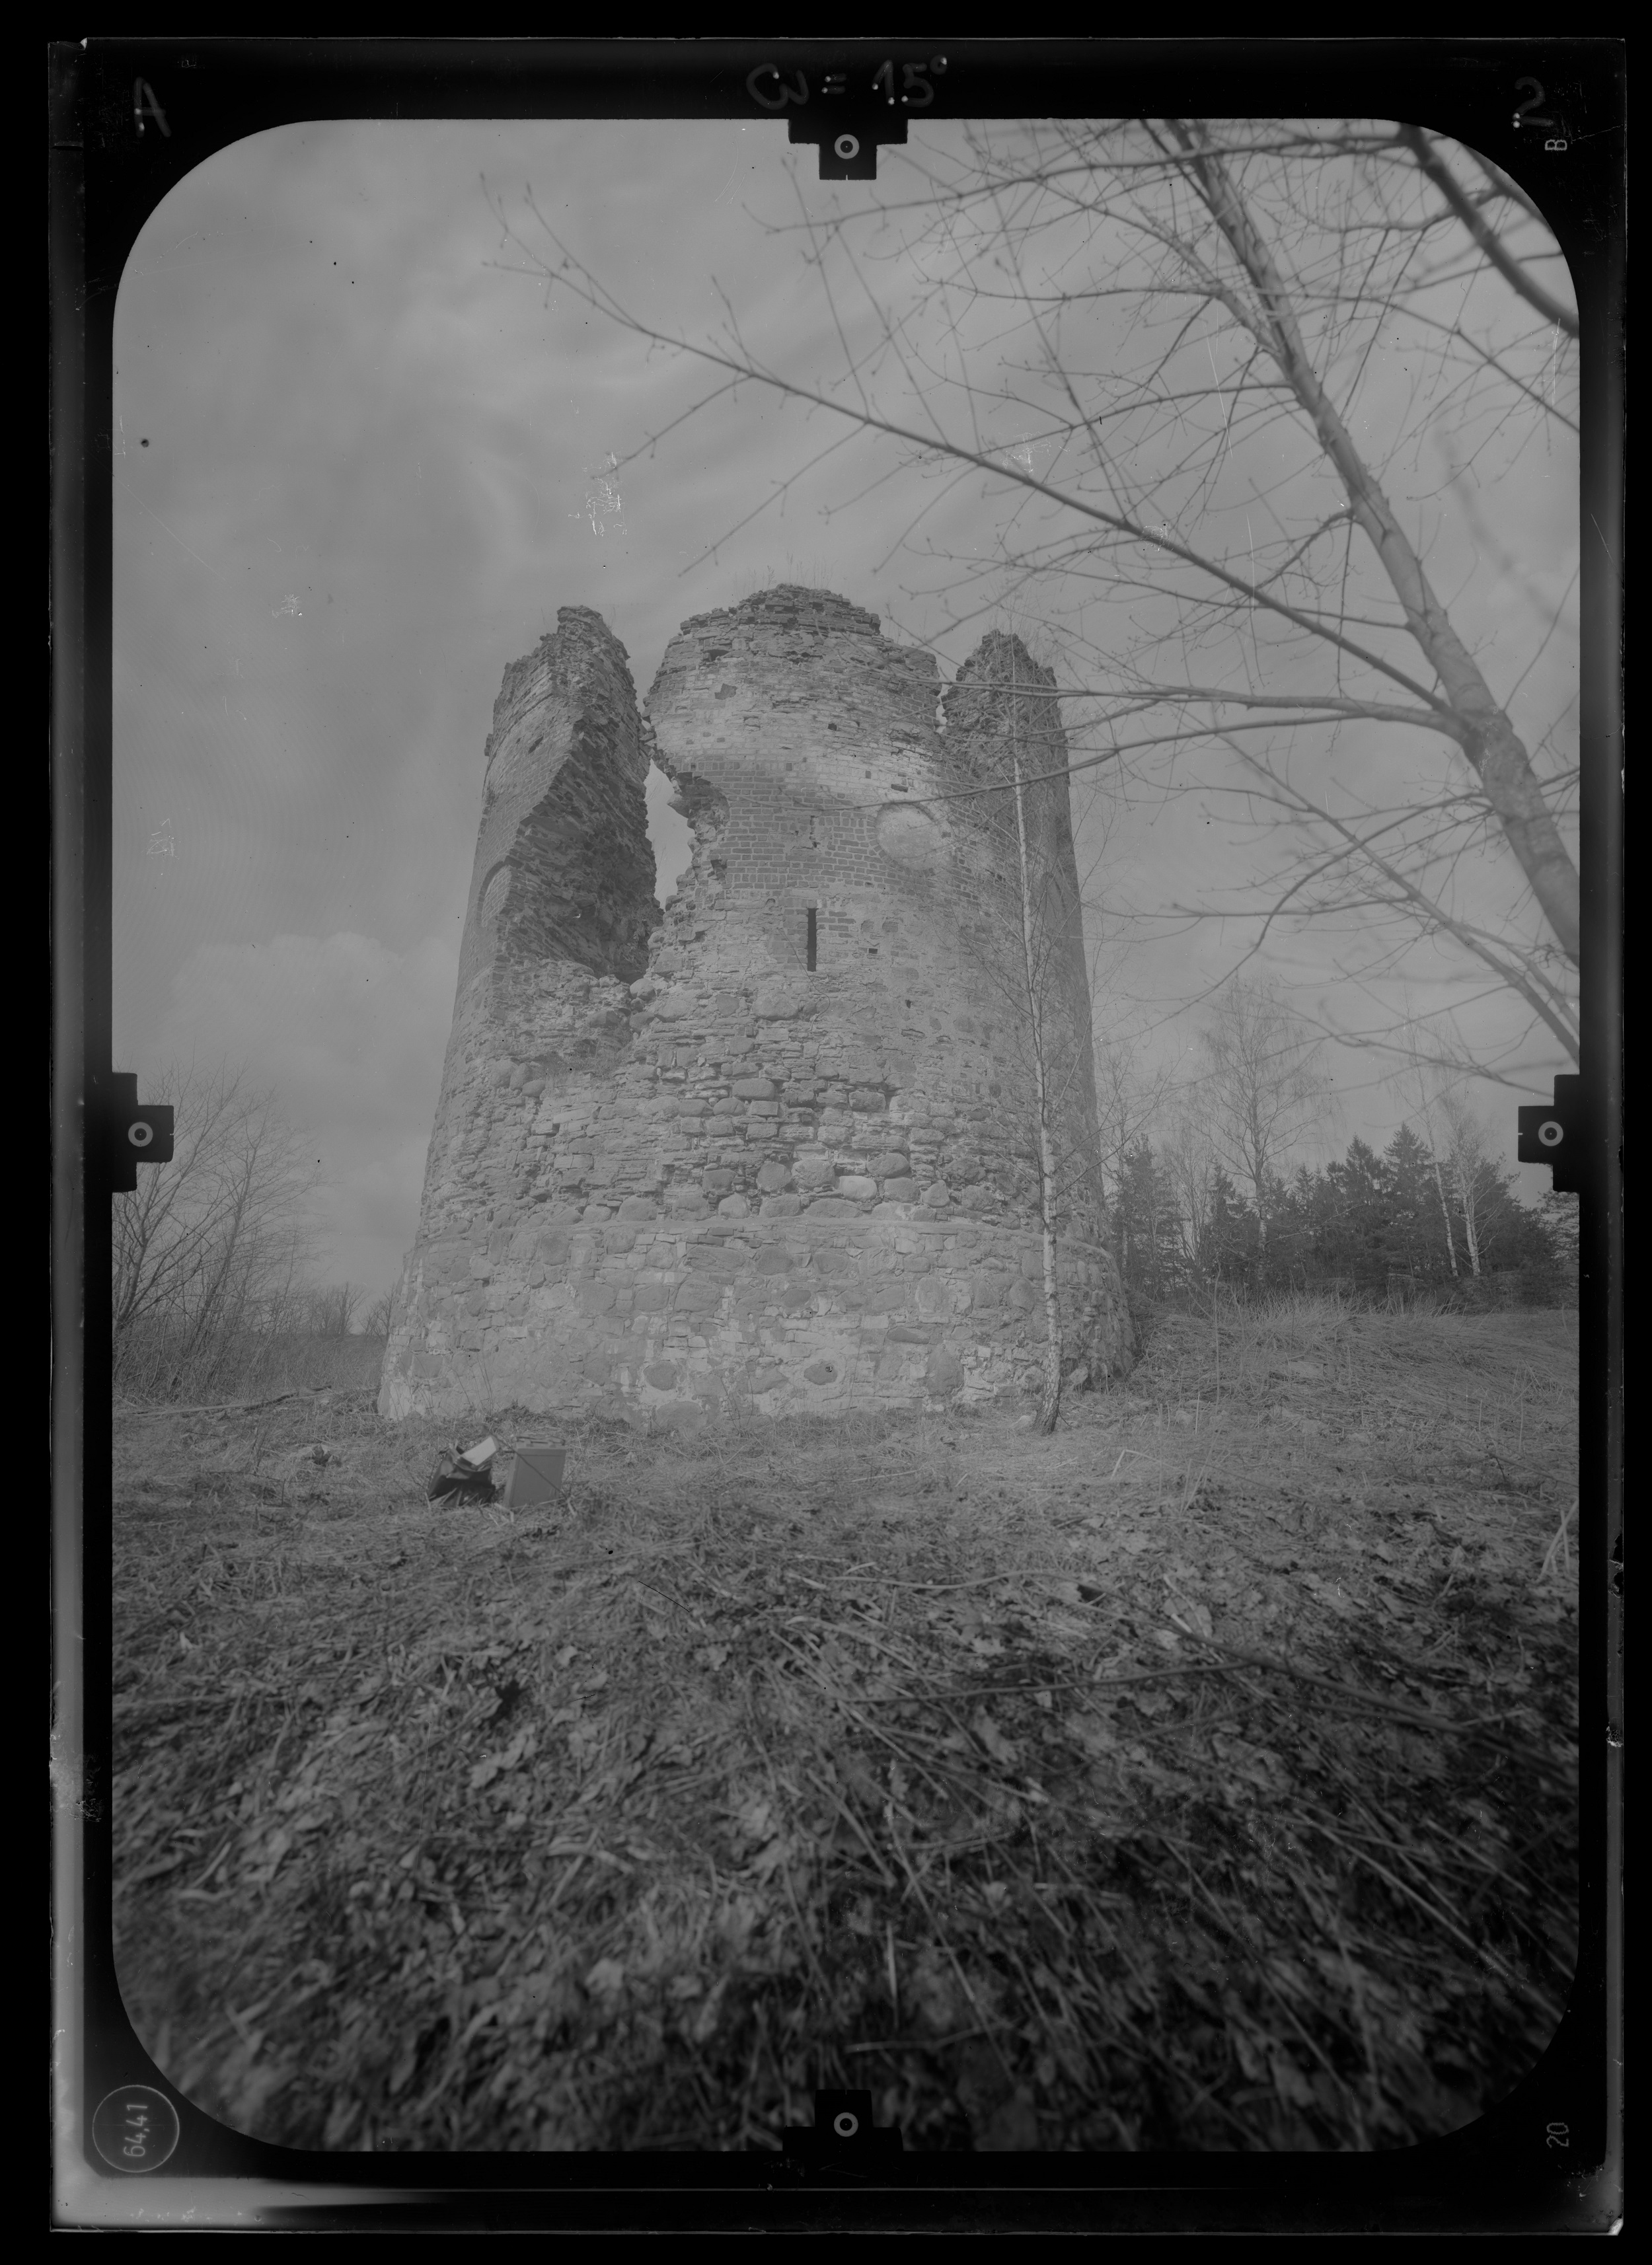 Vastseliina fortress A2-15 - Vastseliina Bishop Castle and fortress. Photogrammetric survey 1991